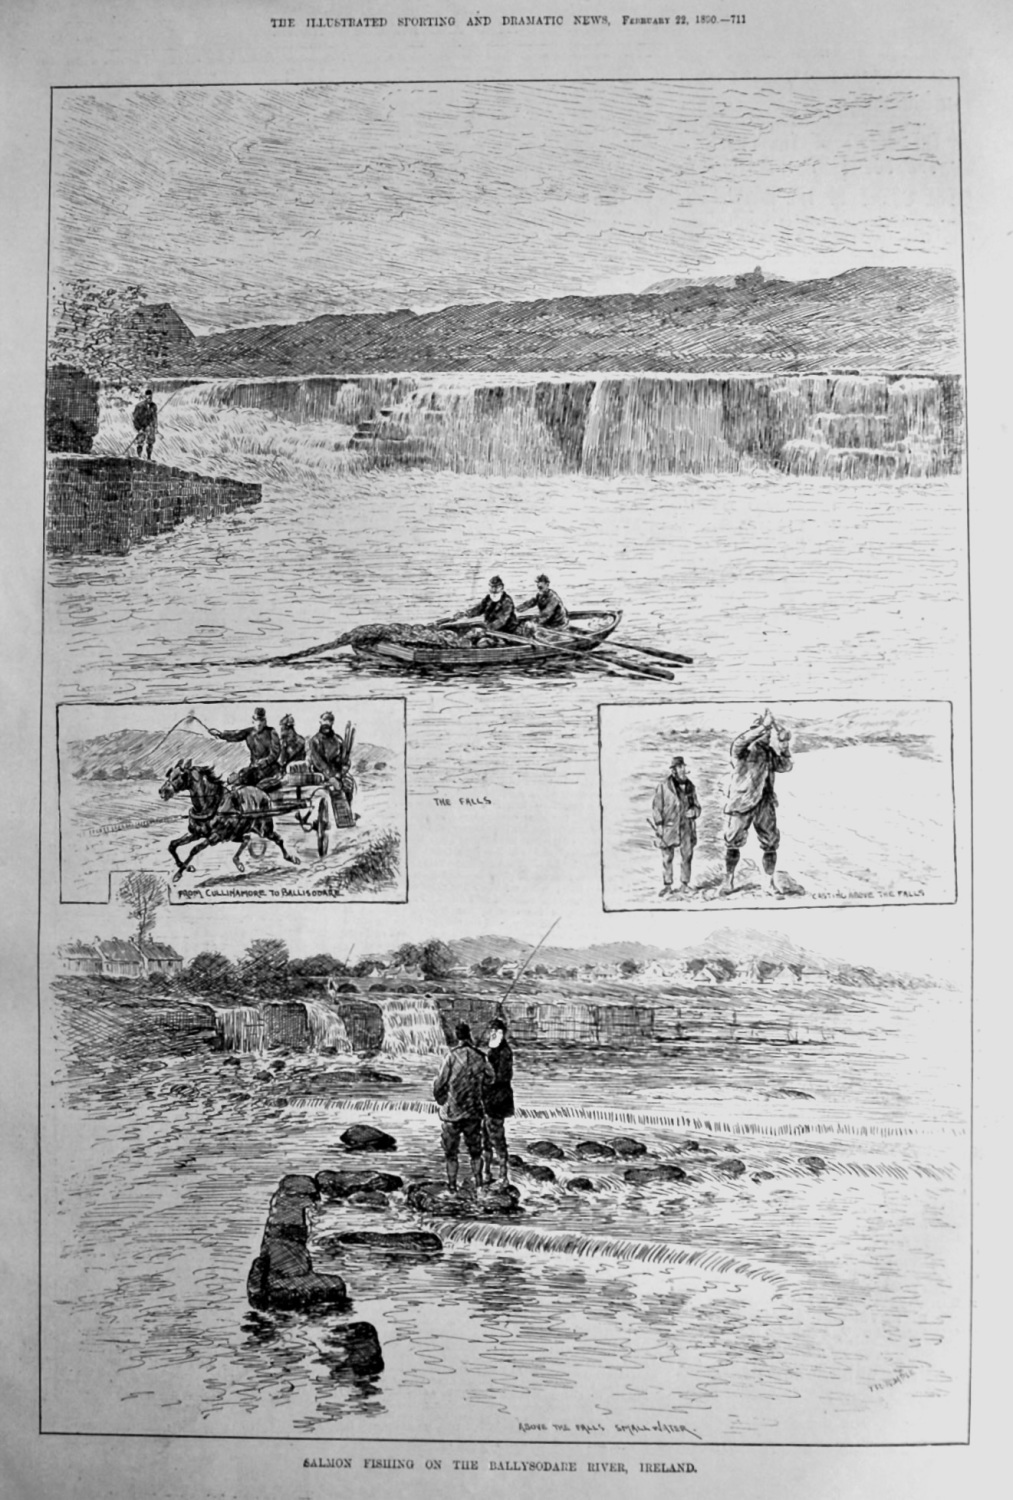 Salmon Fishing on the Ballysodare River, Ireland.  1890.